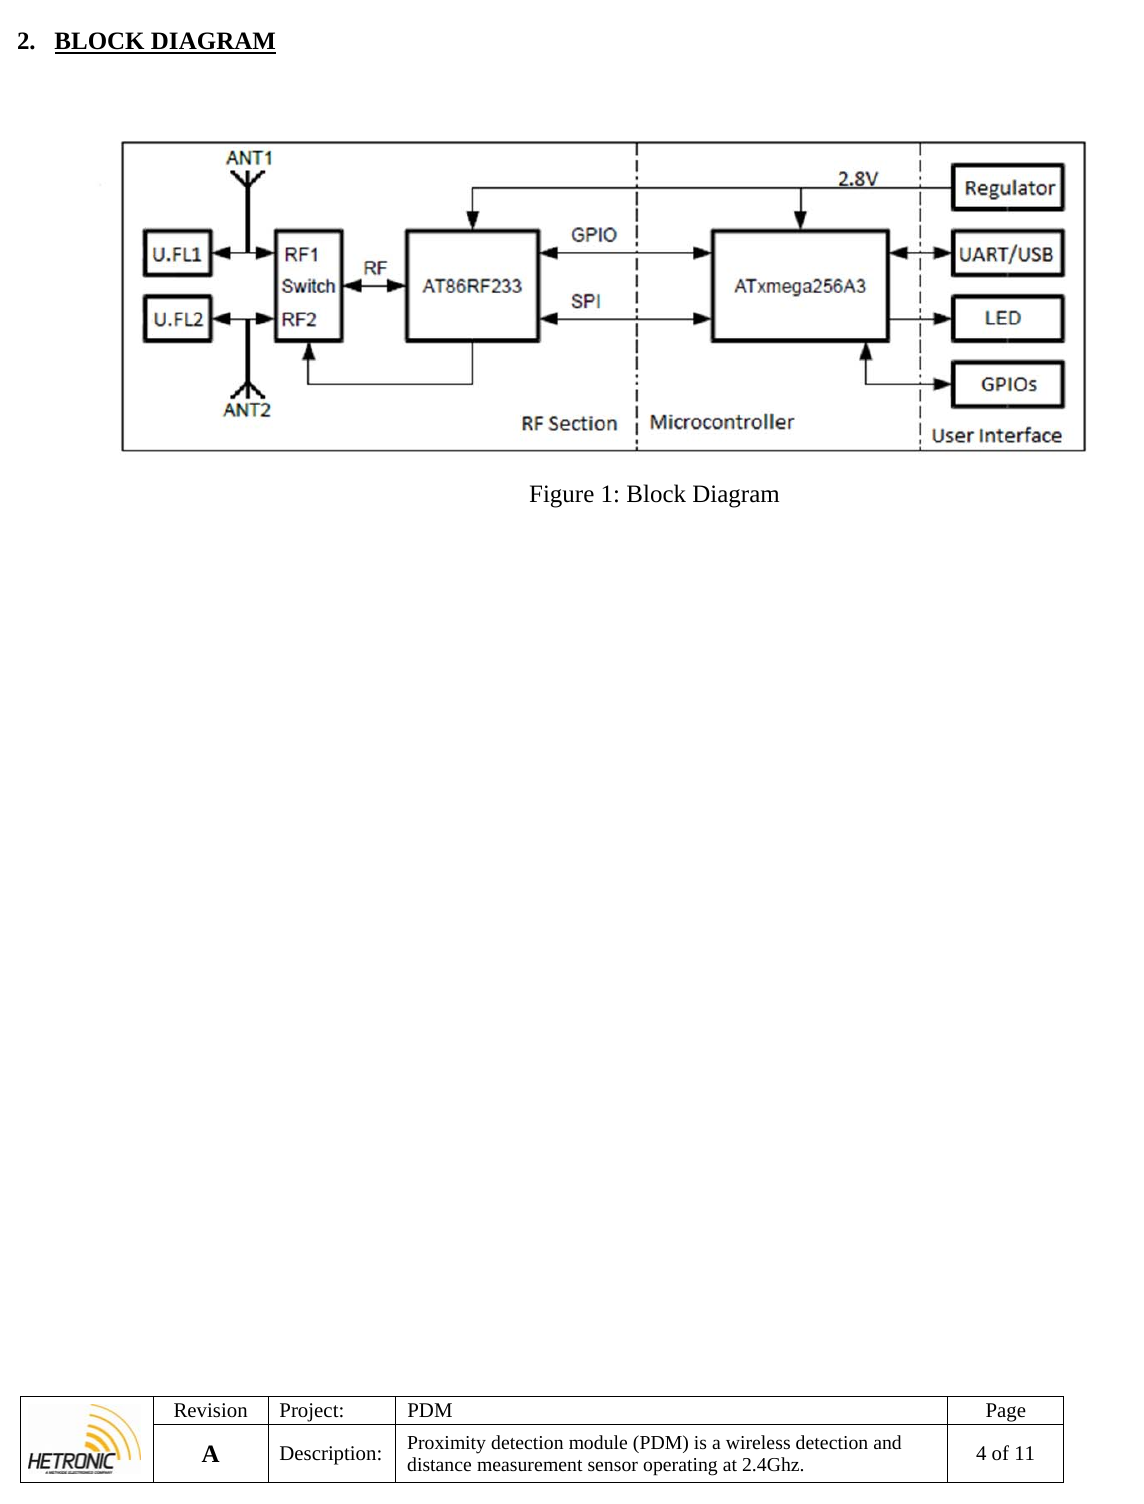   Revision Project:  PDM  Page A Description: Proximity detection module (PDM) is a wireless detection and distance measurement sensor operating at 2.4Ghz. 4 of 11  2. BLOCK DIAGRAM   Figure 1: Block Diagram    